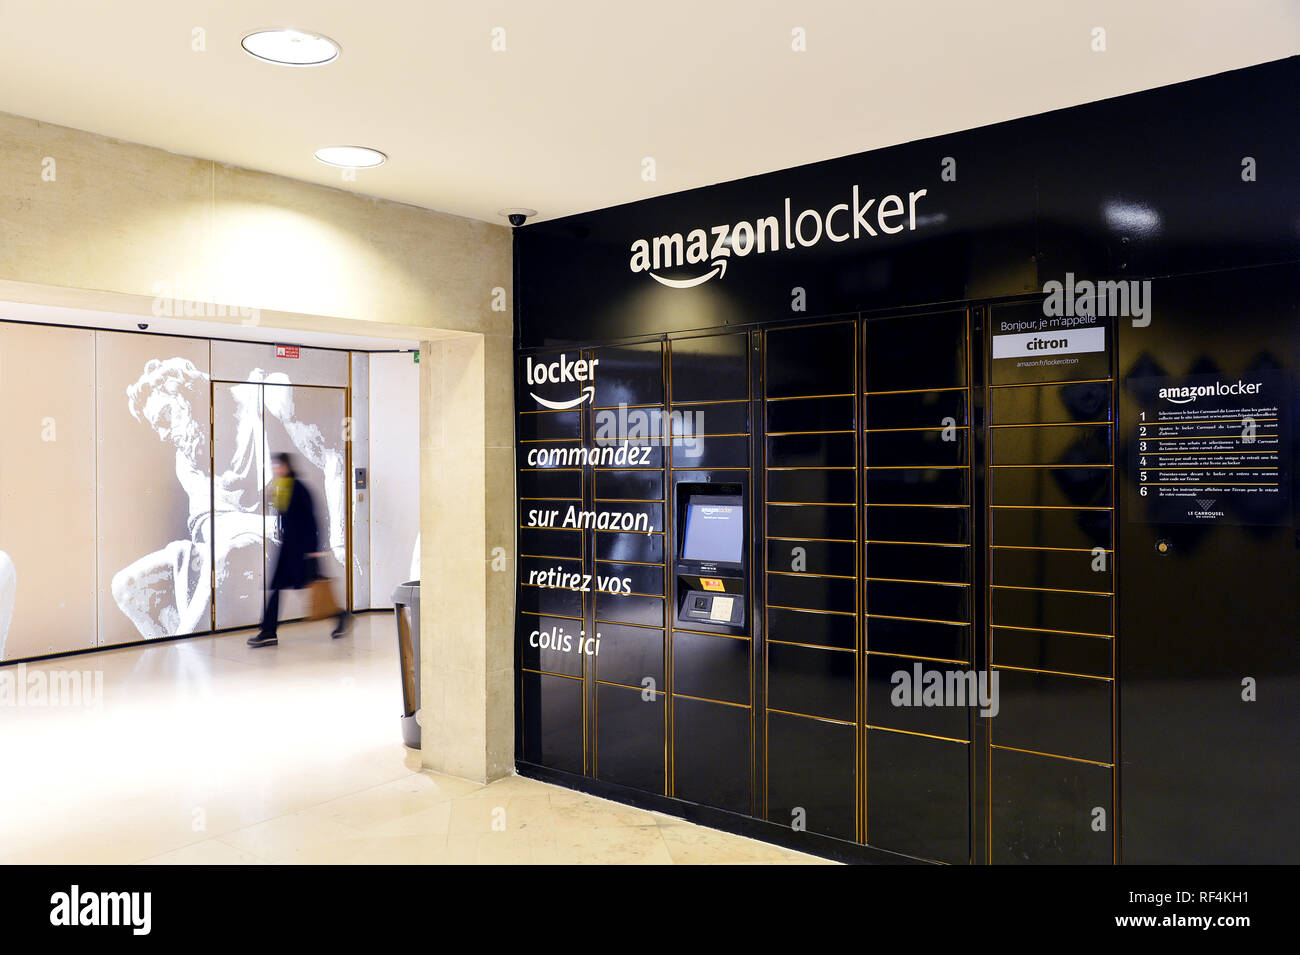 Amazon Locker - Carrousel du Louvre - Paris - France Stock Photo - Alamy